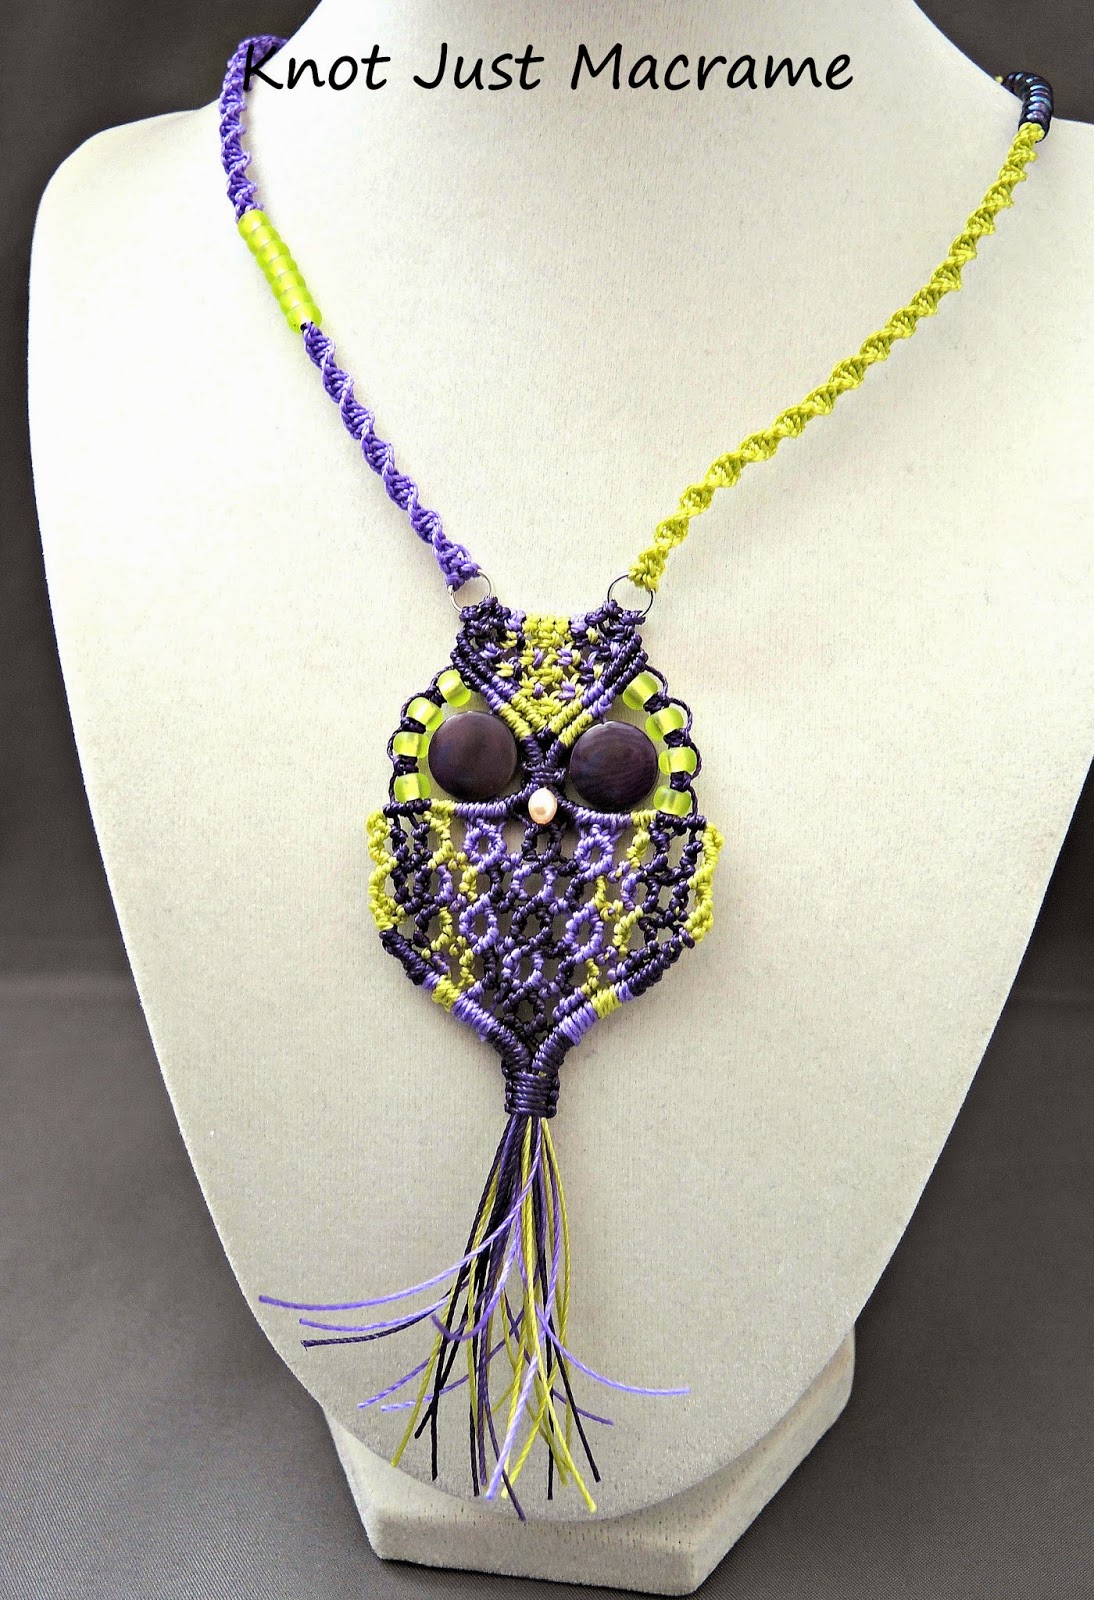 Micro macrame owl necklace by Sherri Stokey of Knot Just Macrame